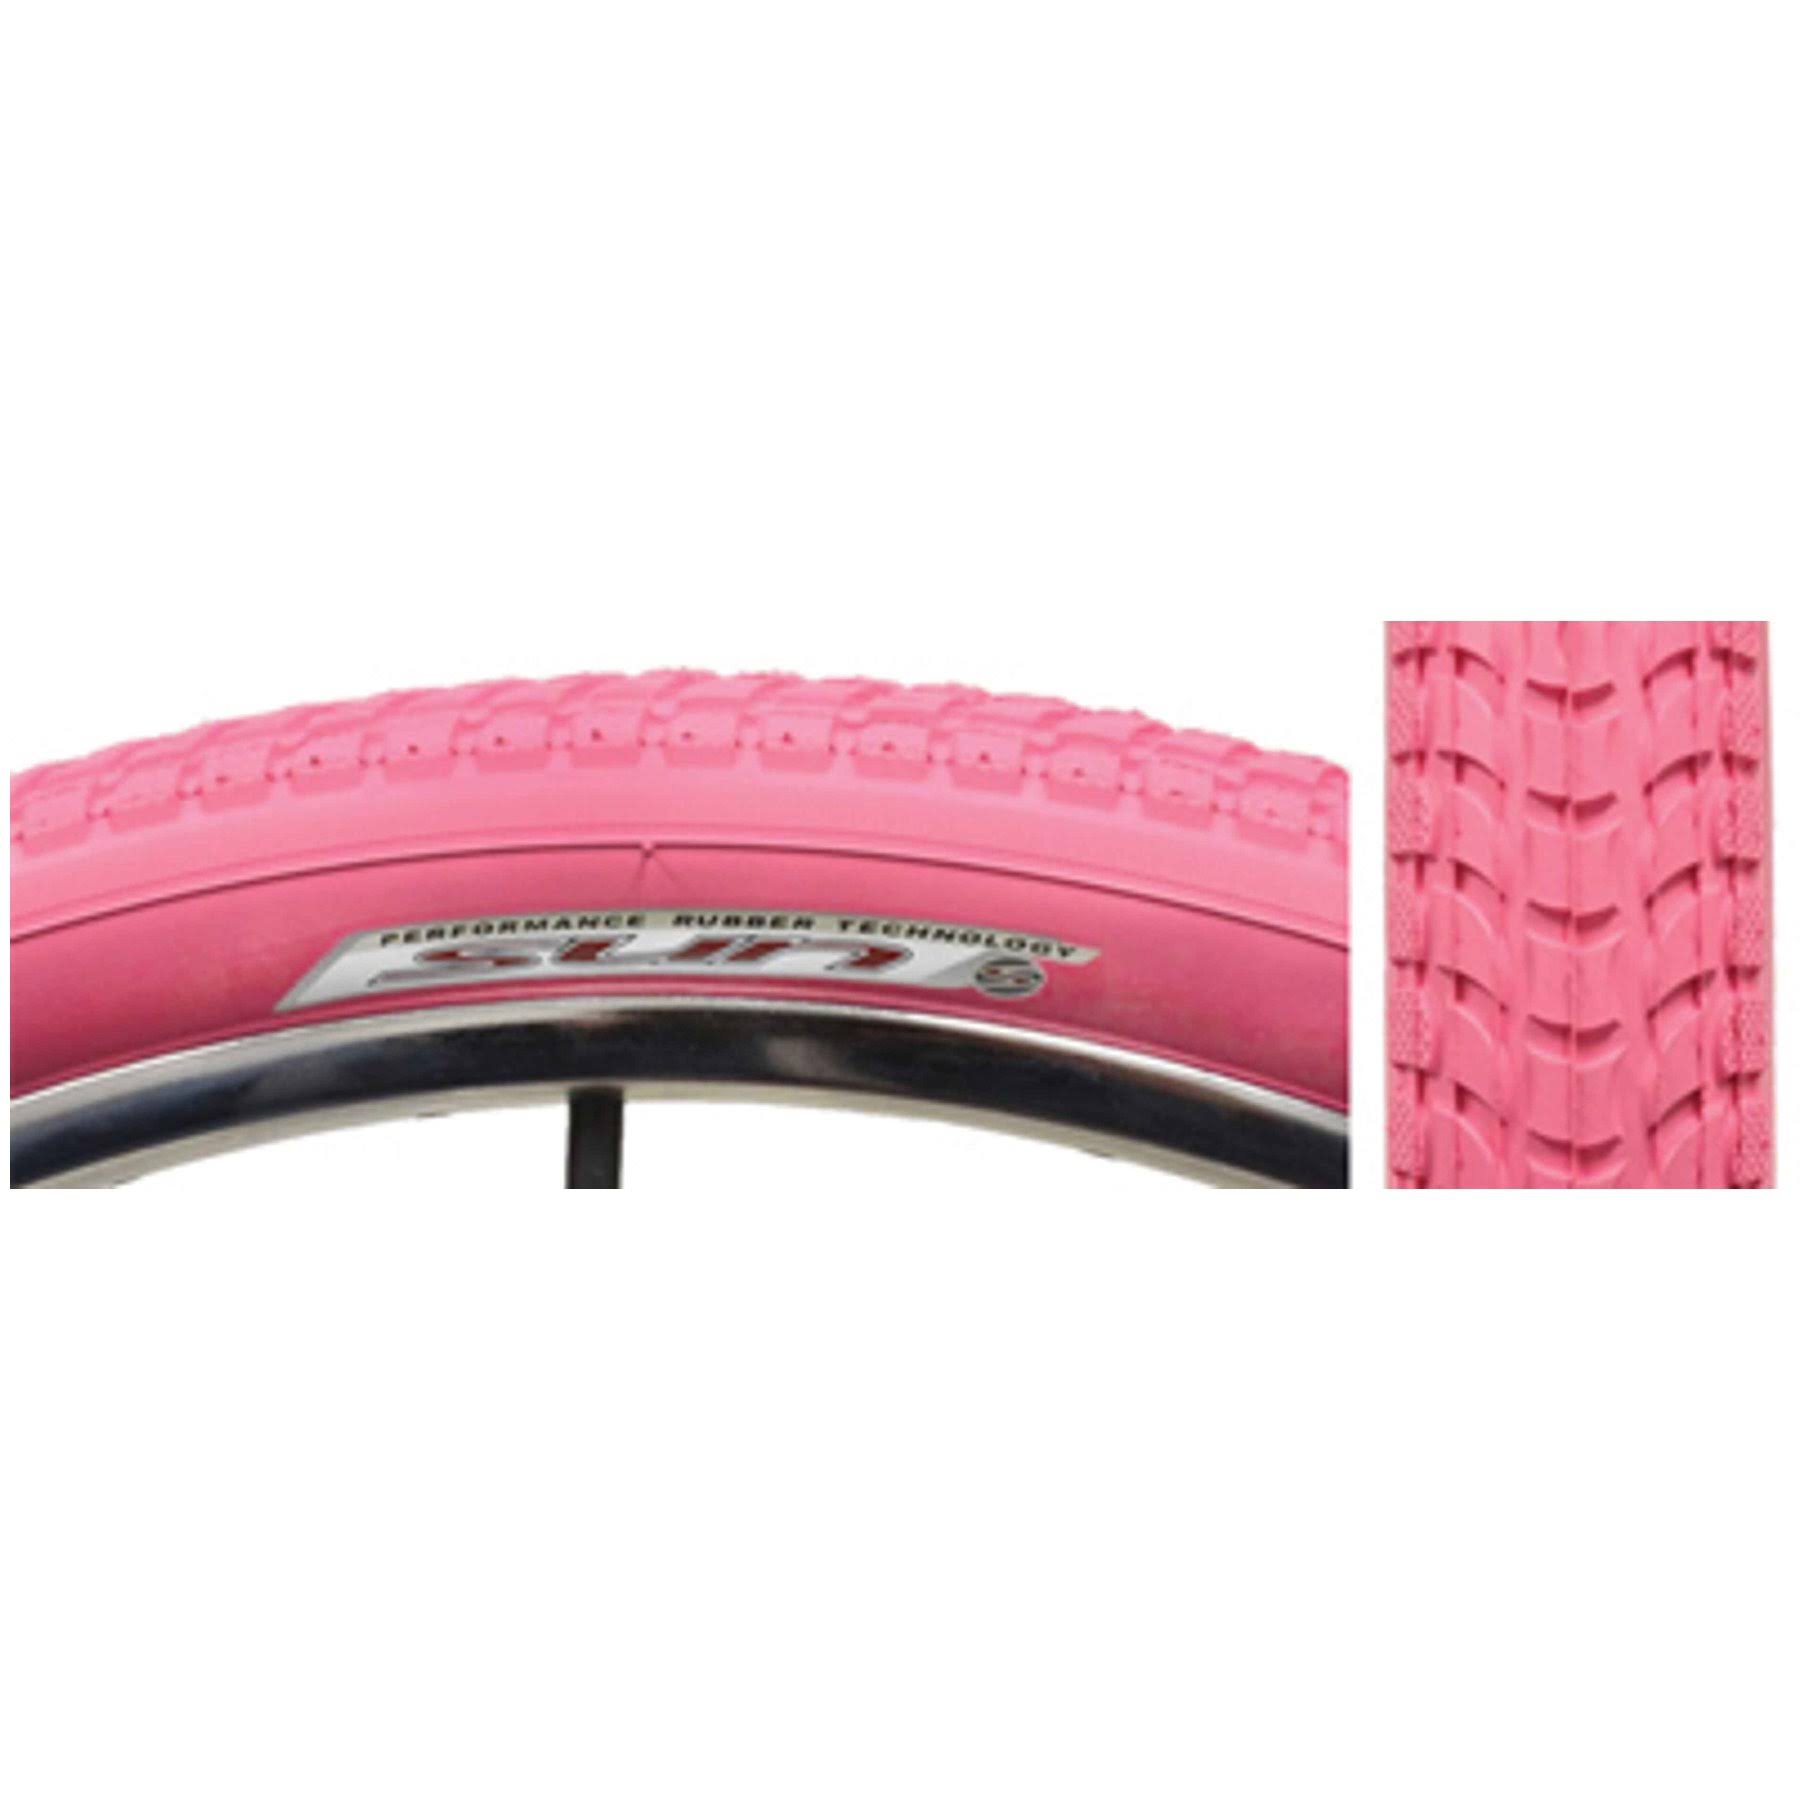 Sunlite Cruiser 927 Tires - Pink/Pink, 26"x 2.125"